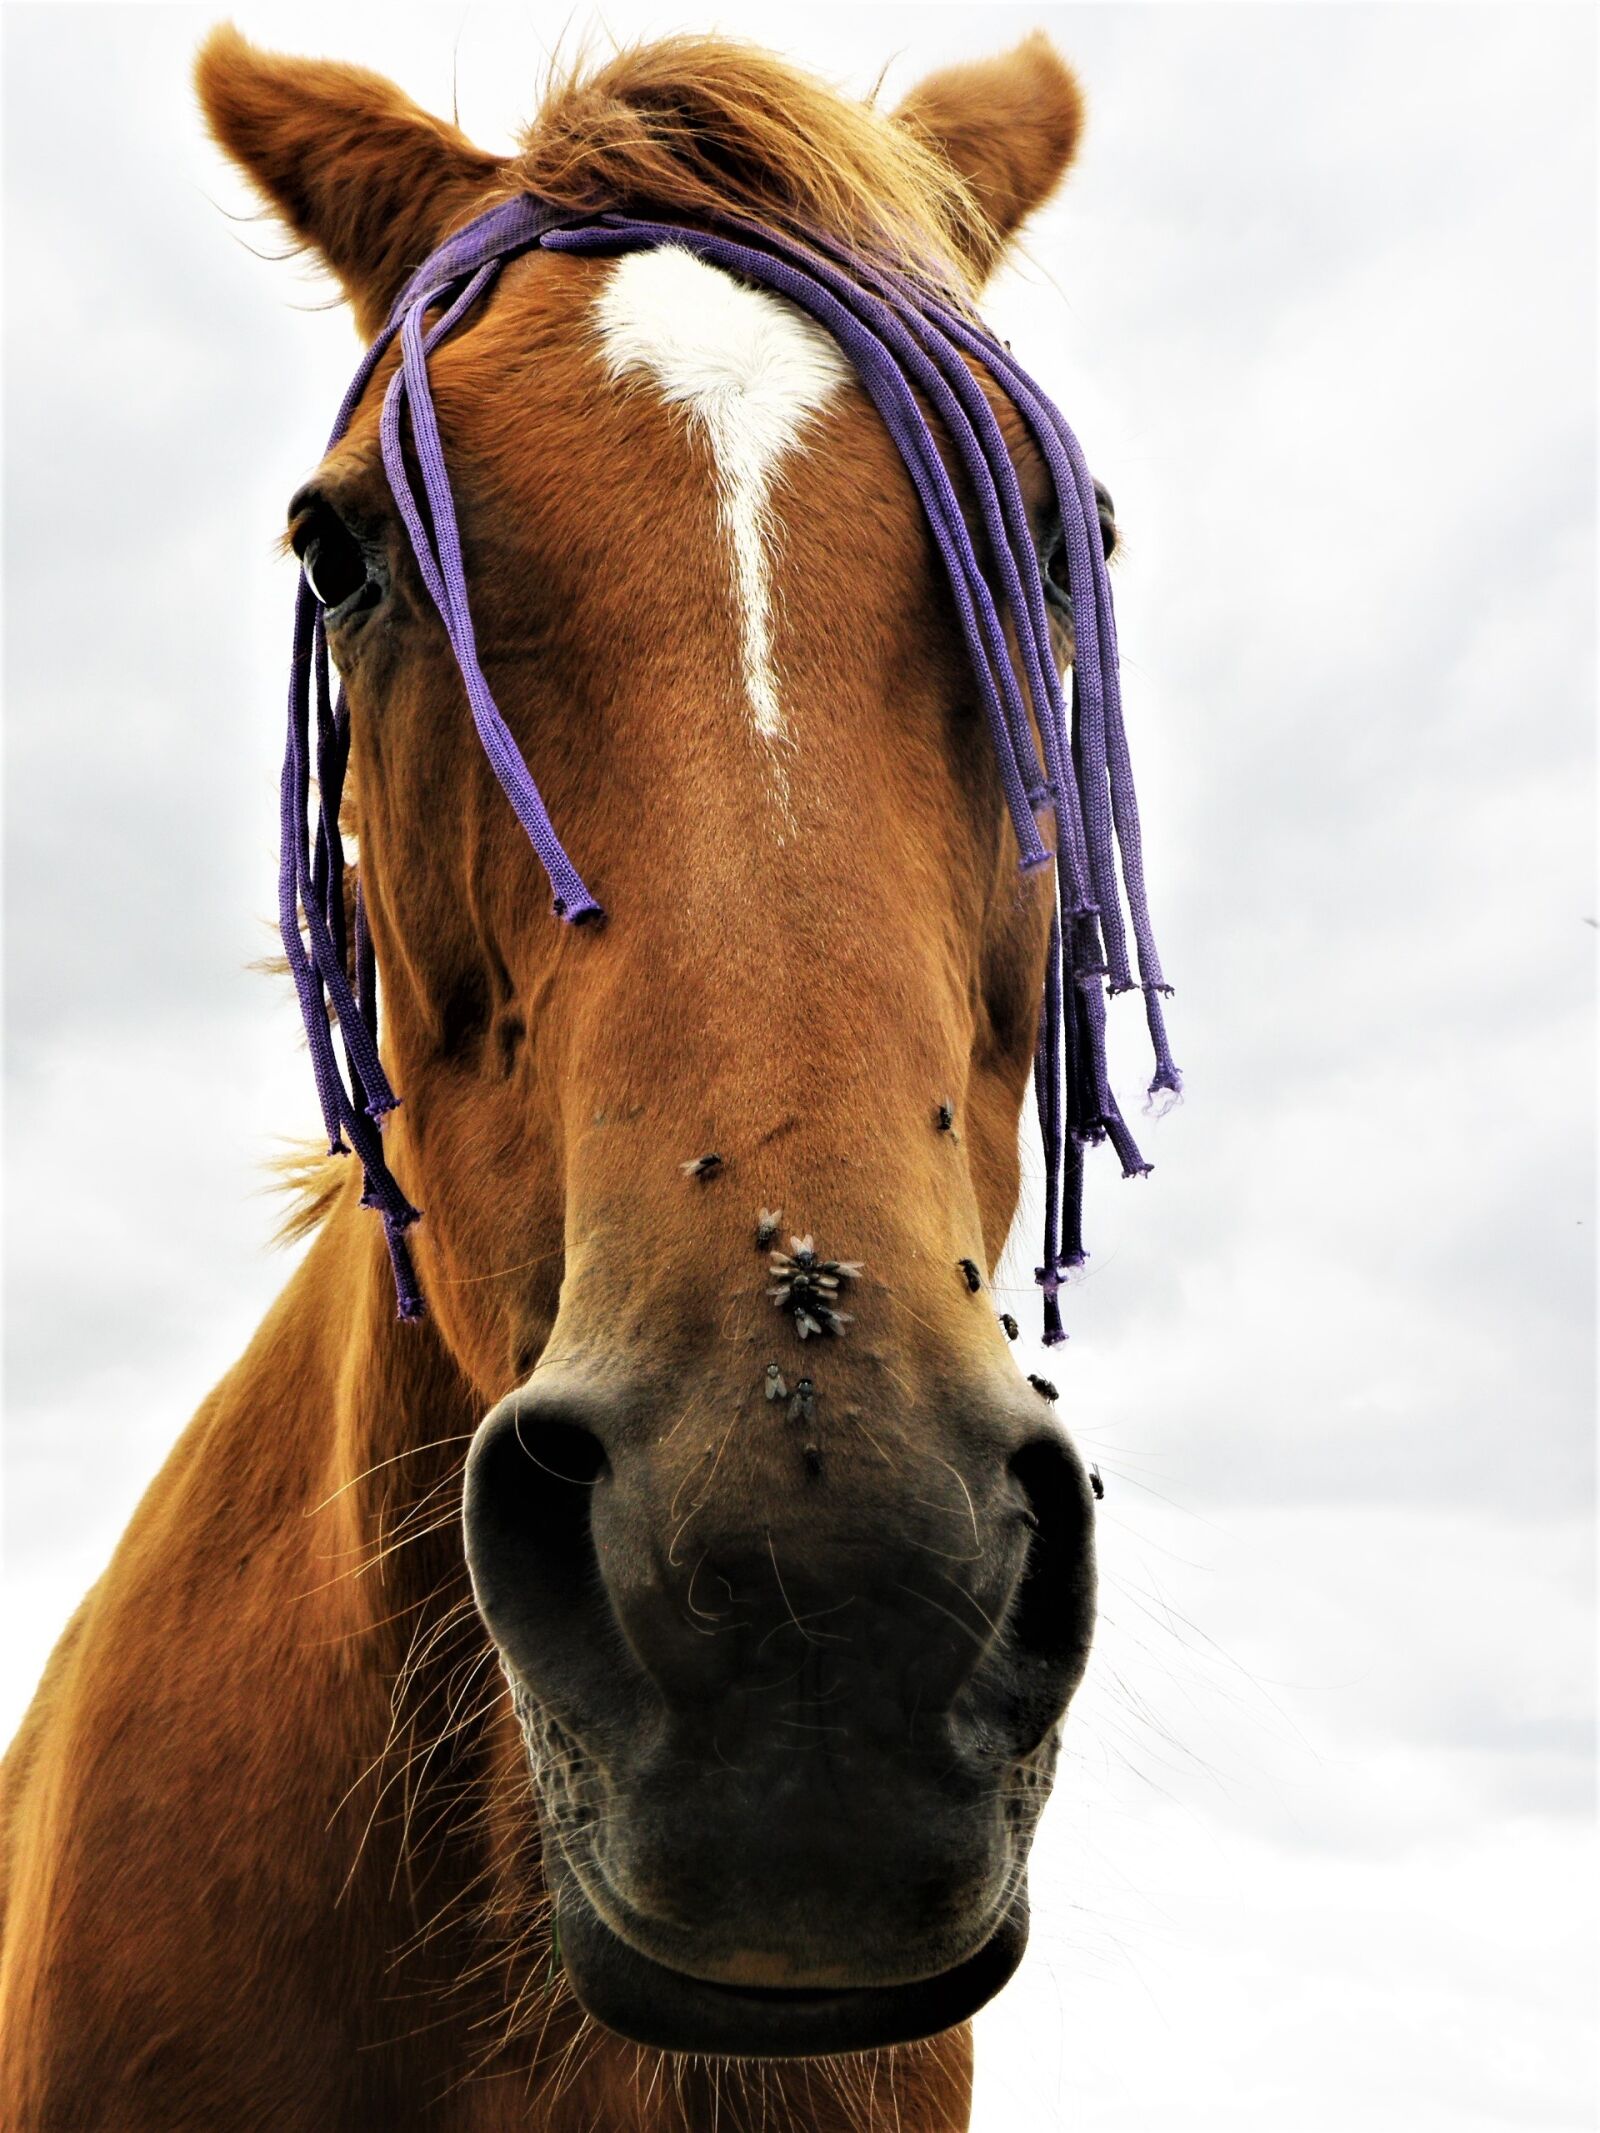 Olympus SP570UZ sample photo. Animal, horse, equine photography